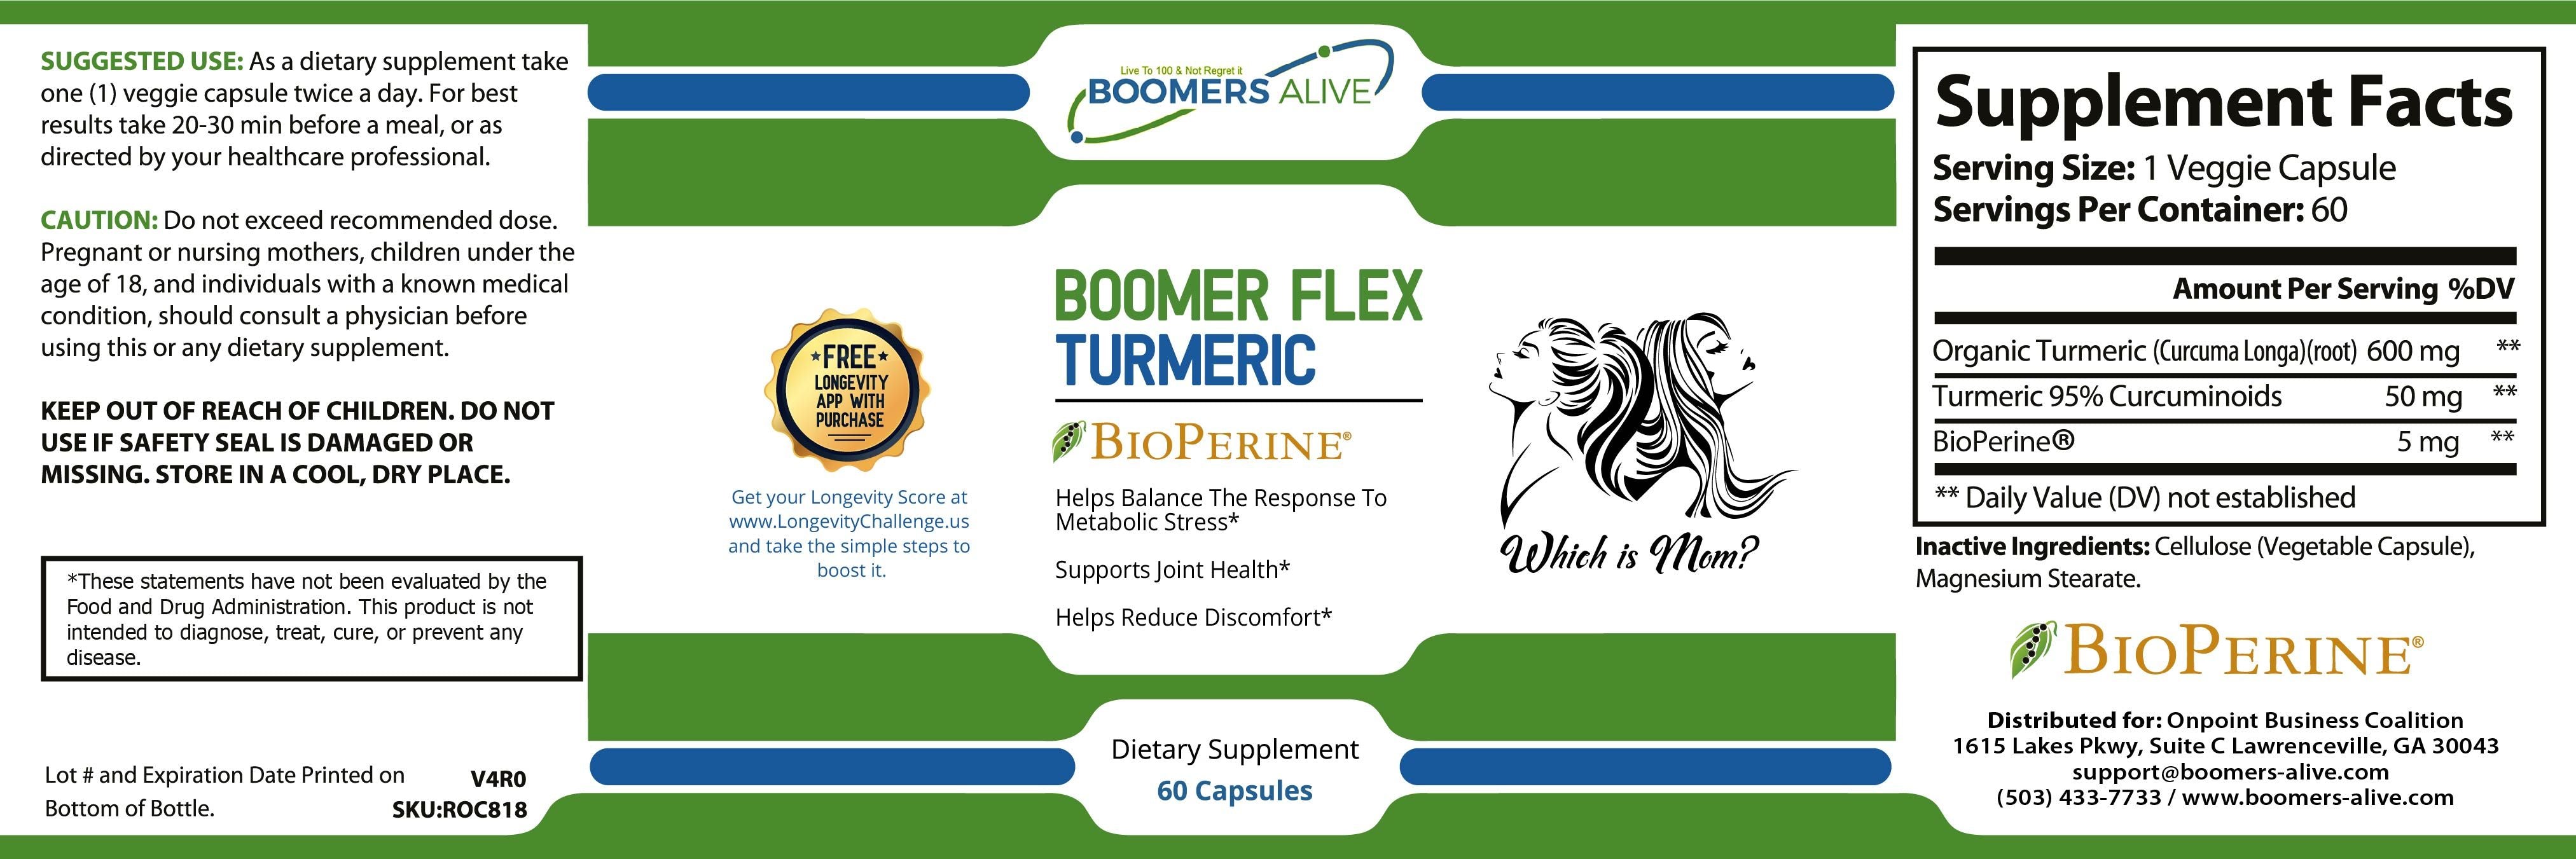 Buy 1 - Get 3 FREE: Boomer Flex Turmeric